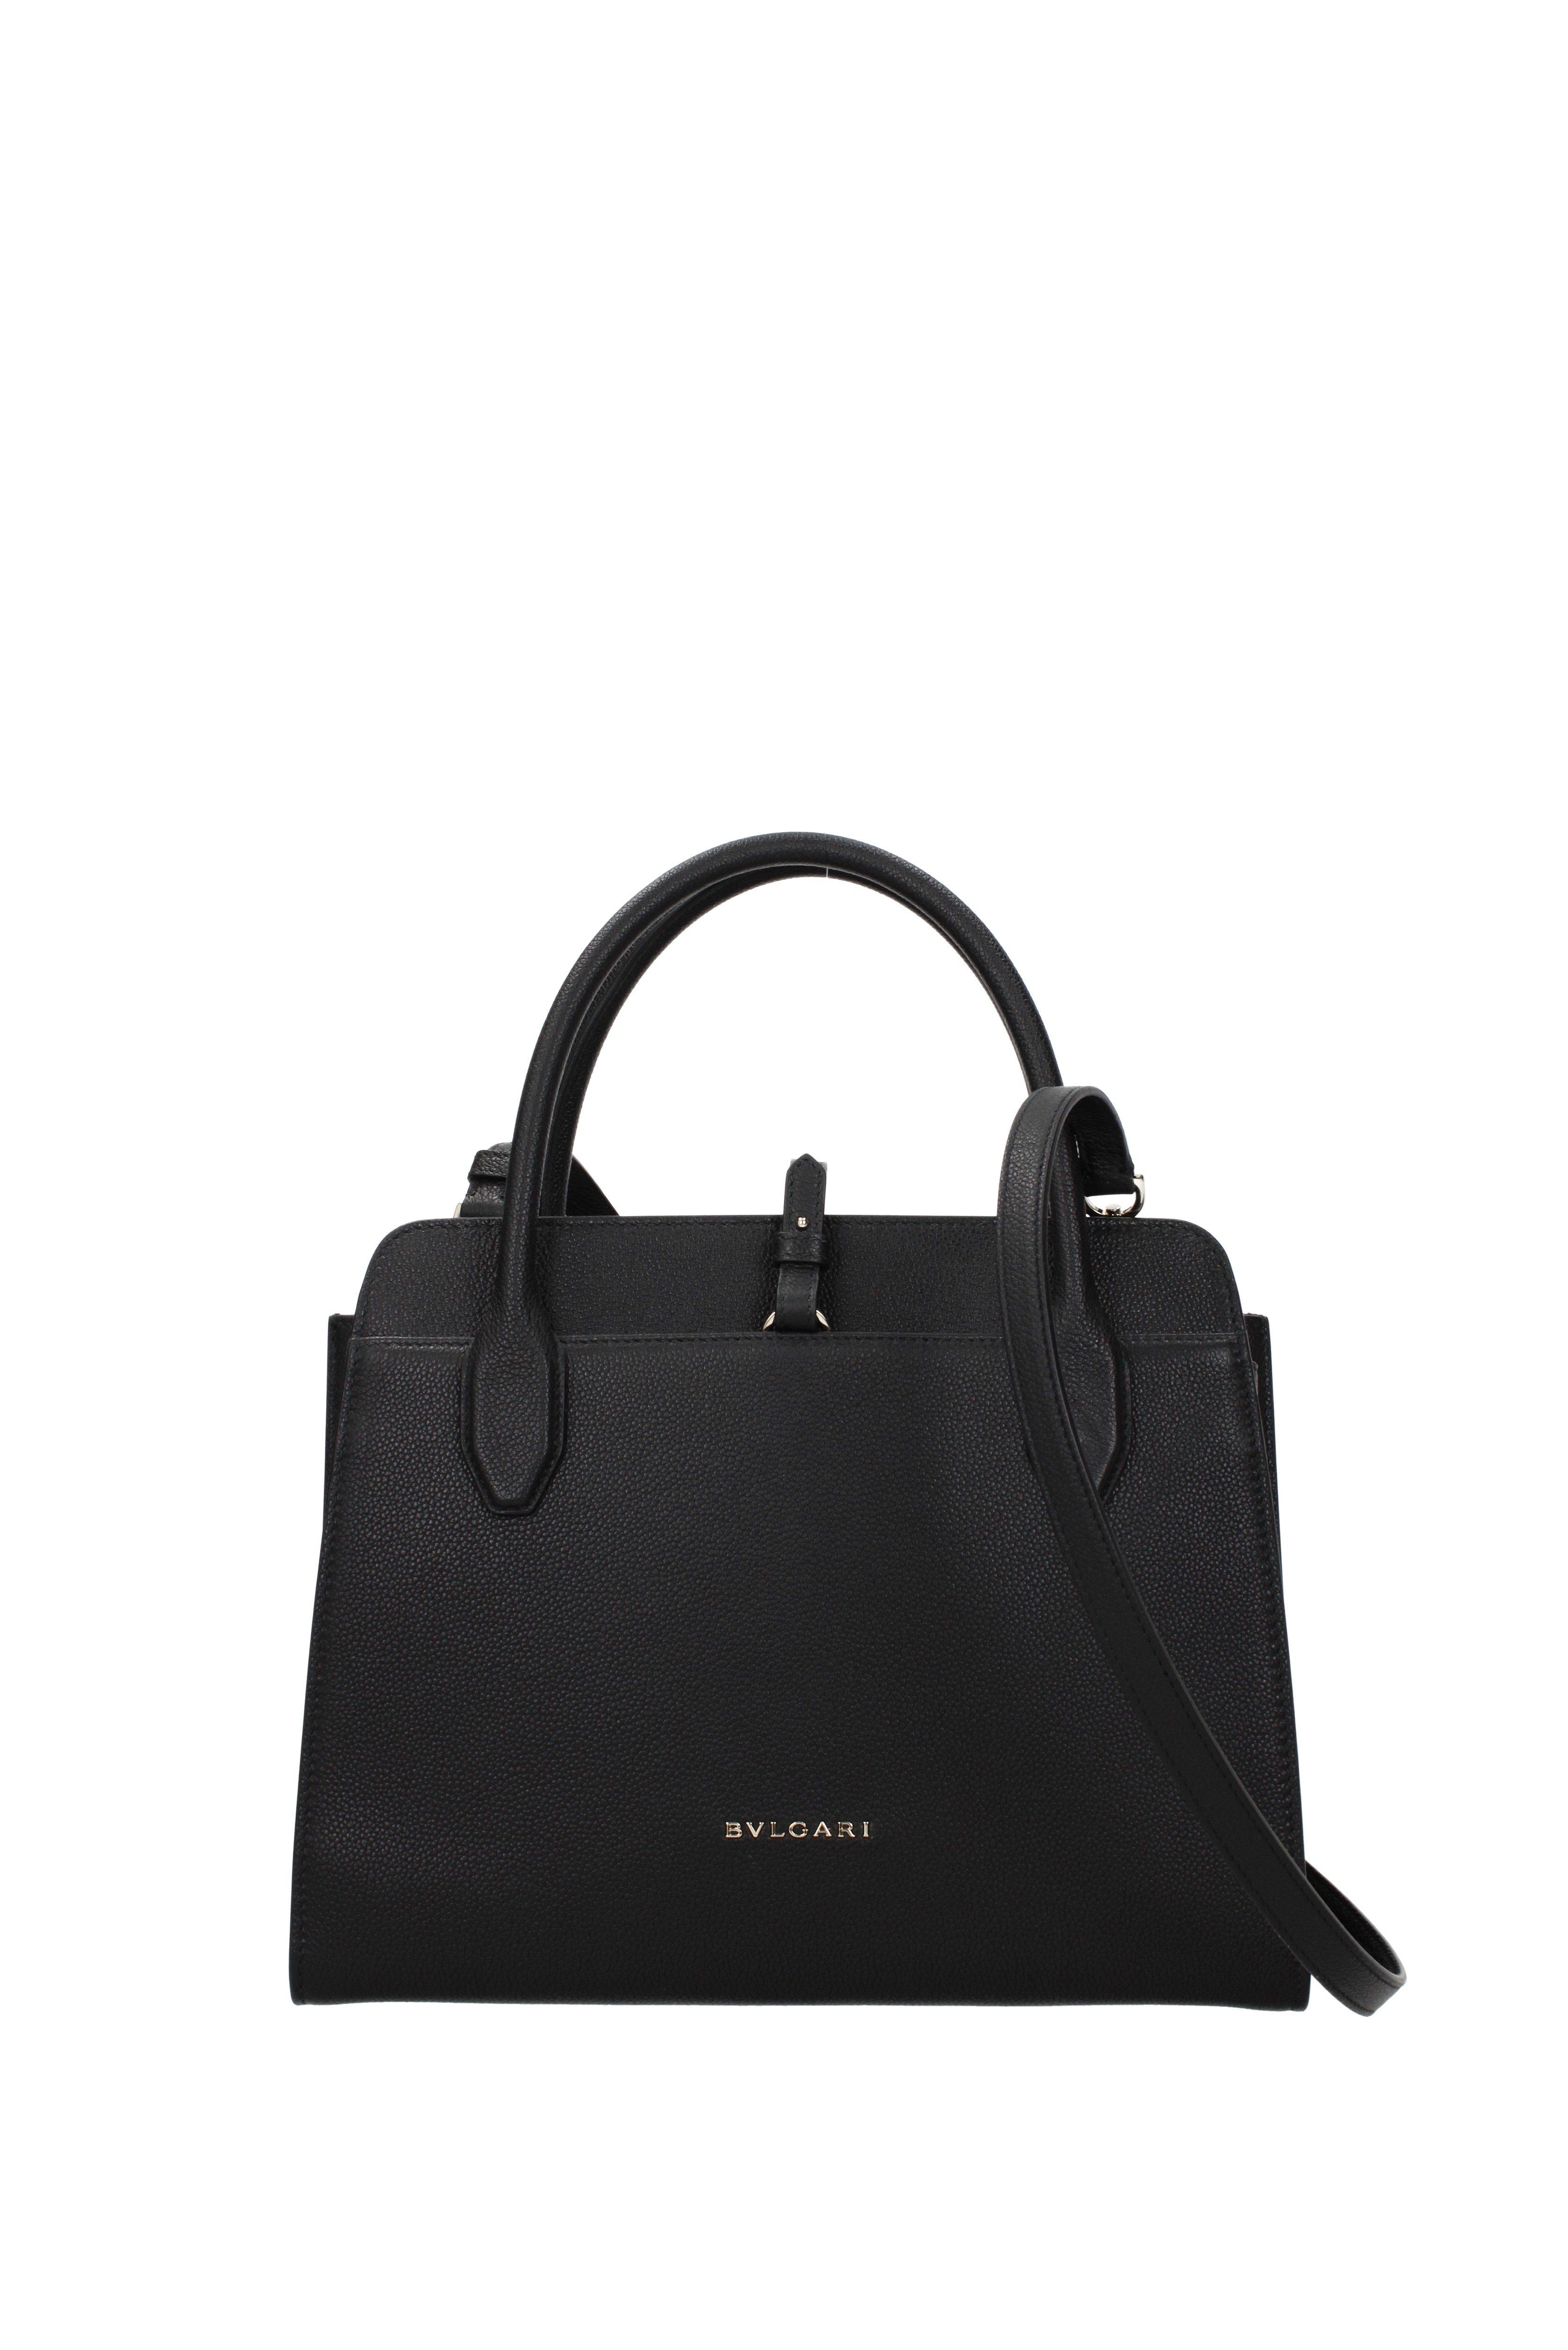 bvlgari black handbags